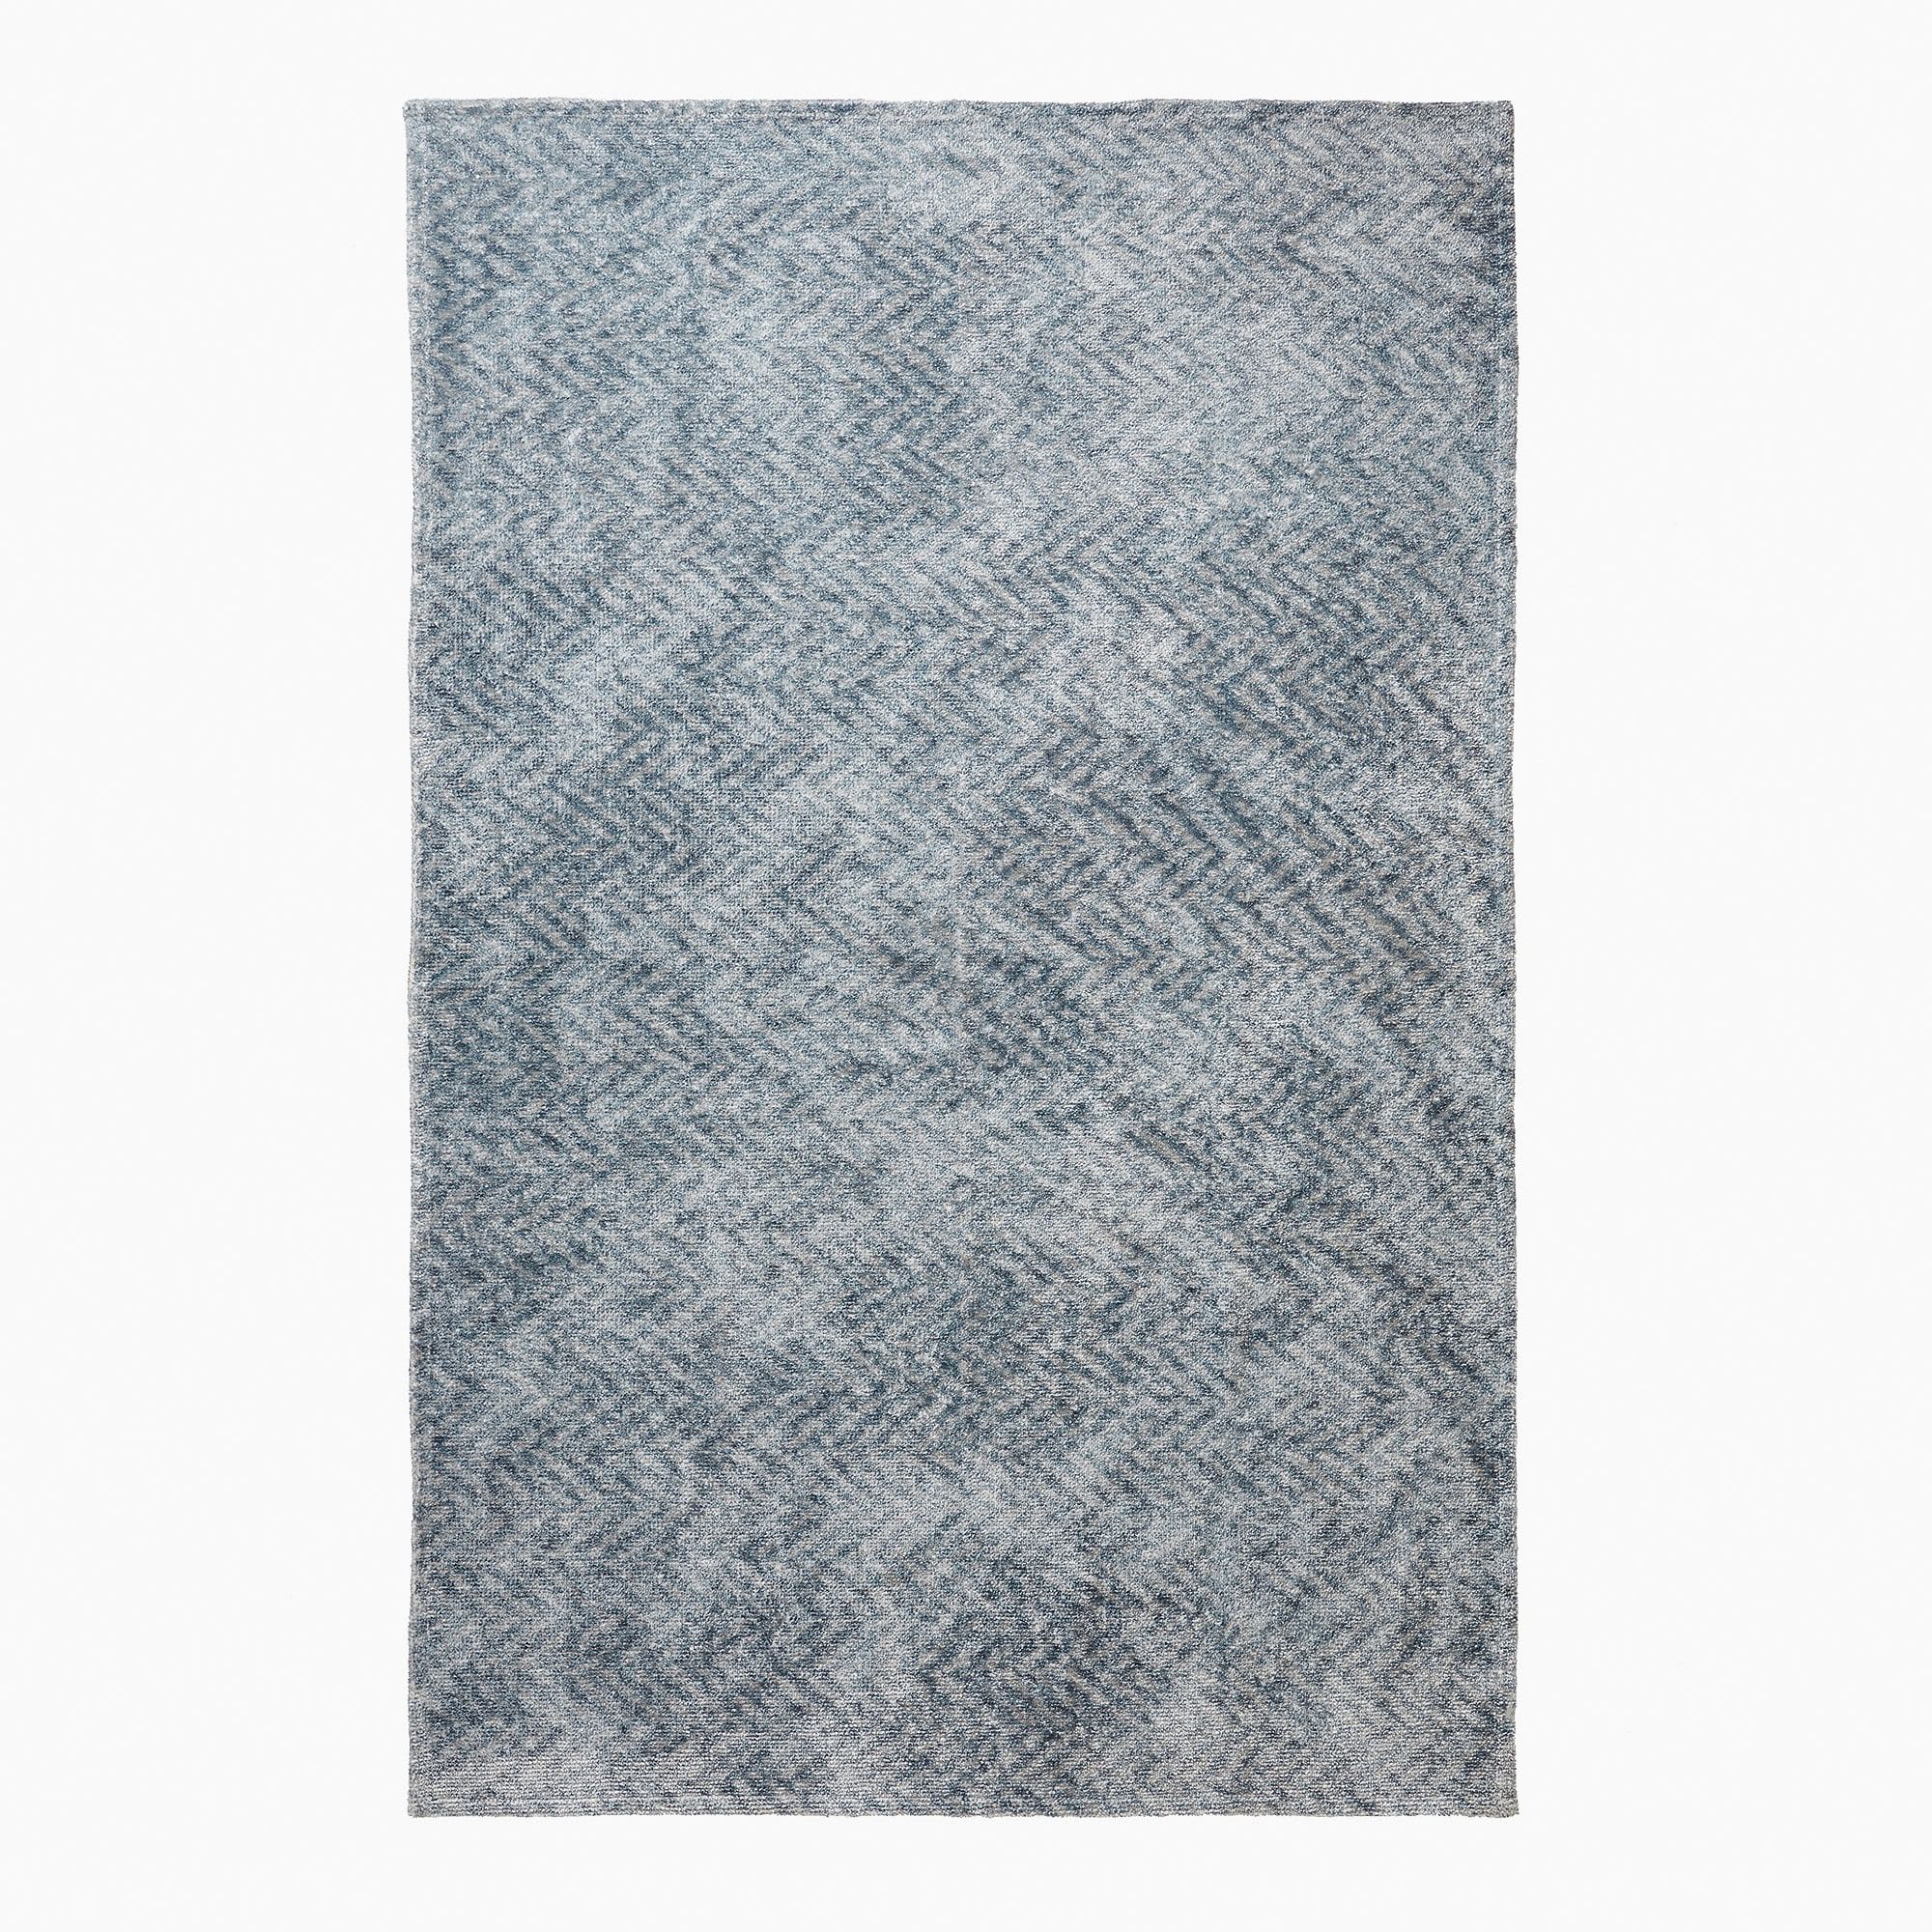 Ruggable - Same washable rug, new cushy comfort ✨ ☁️ Officially